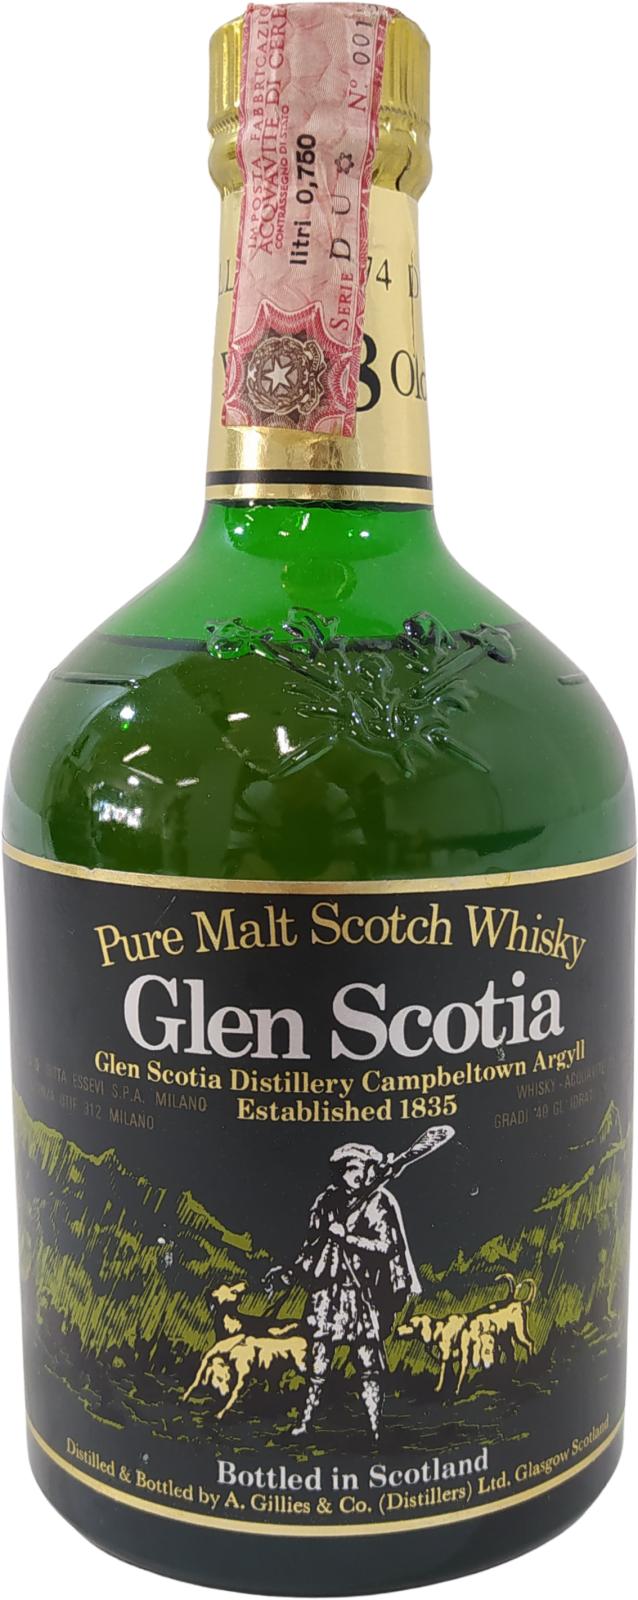 Glen Scotia Blended Scotch Whisky